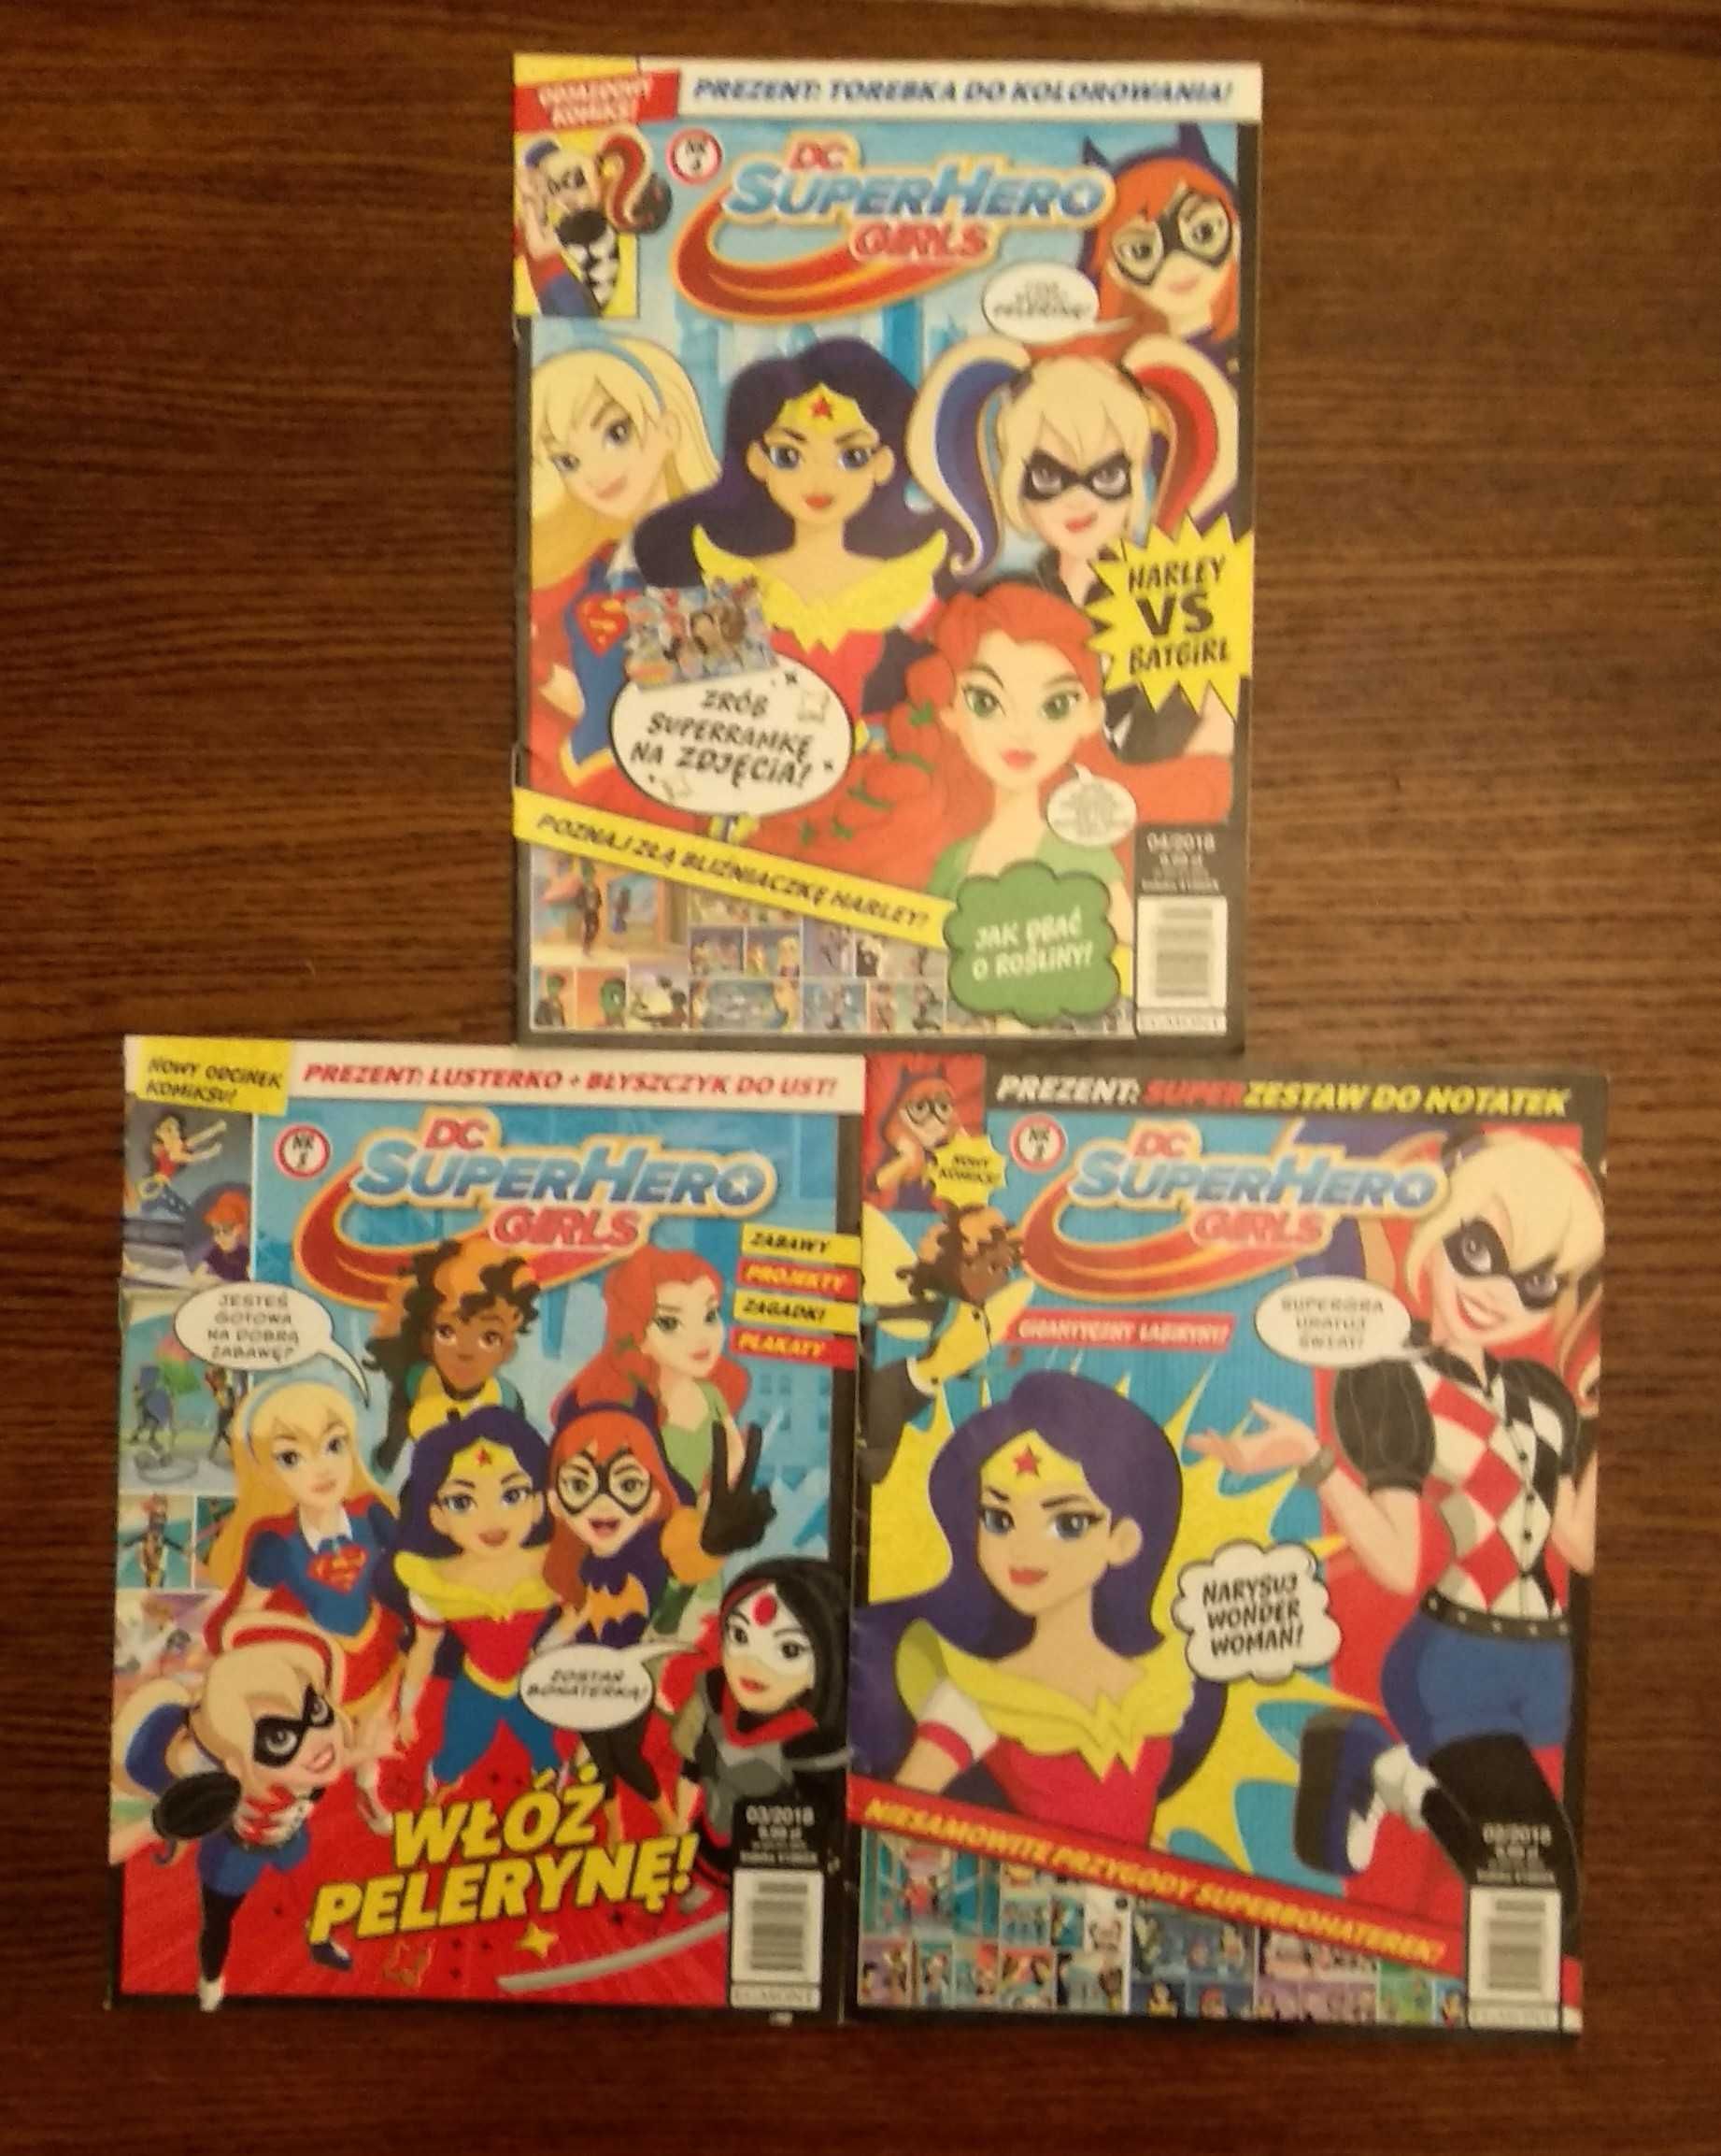 6 x magazyn "DC Superhero Girls"